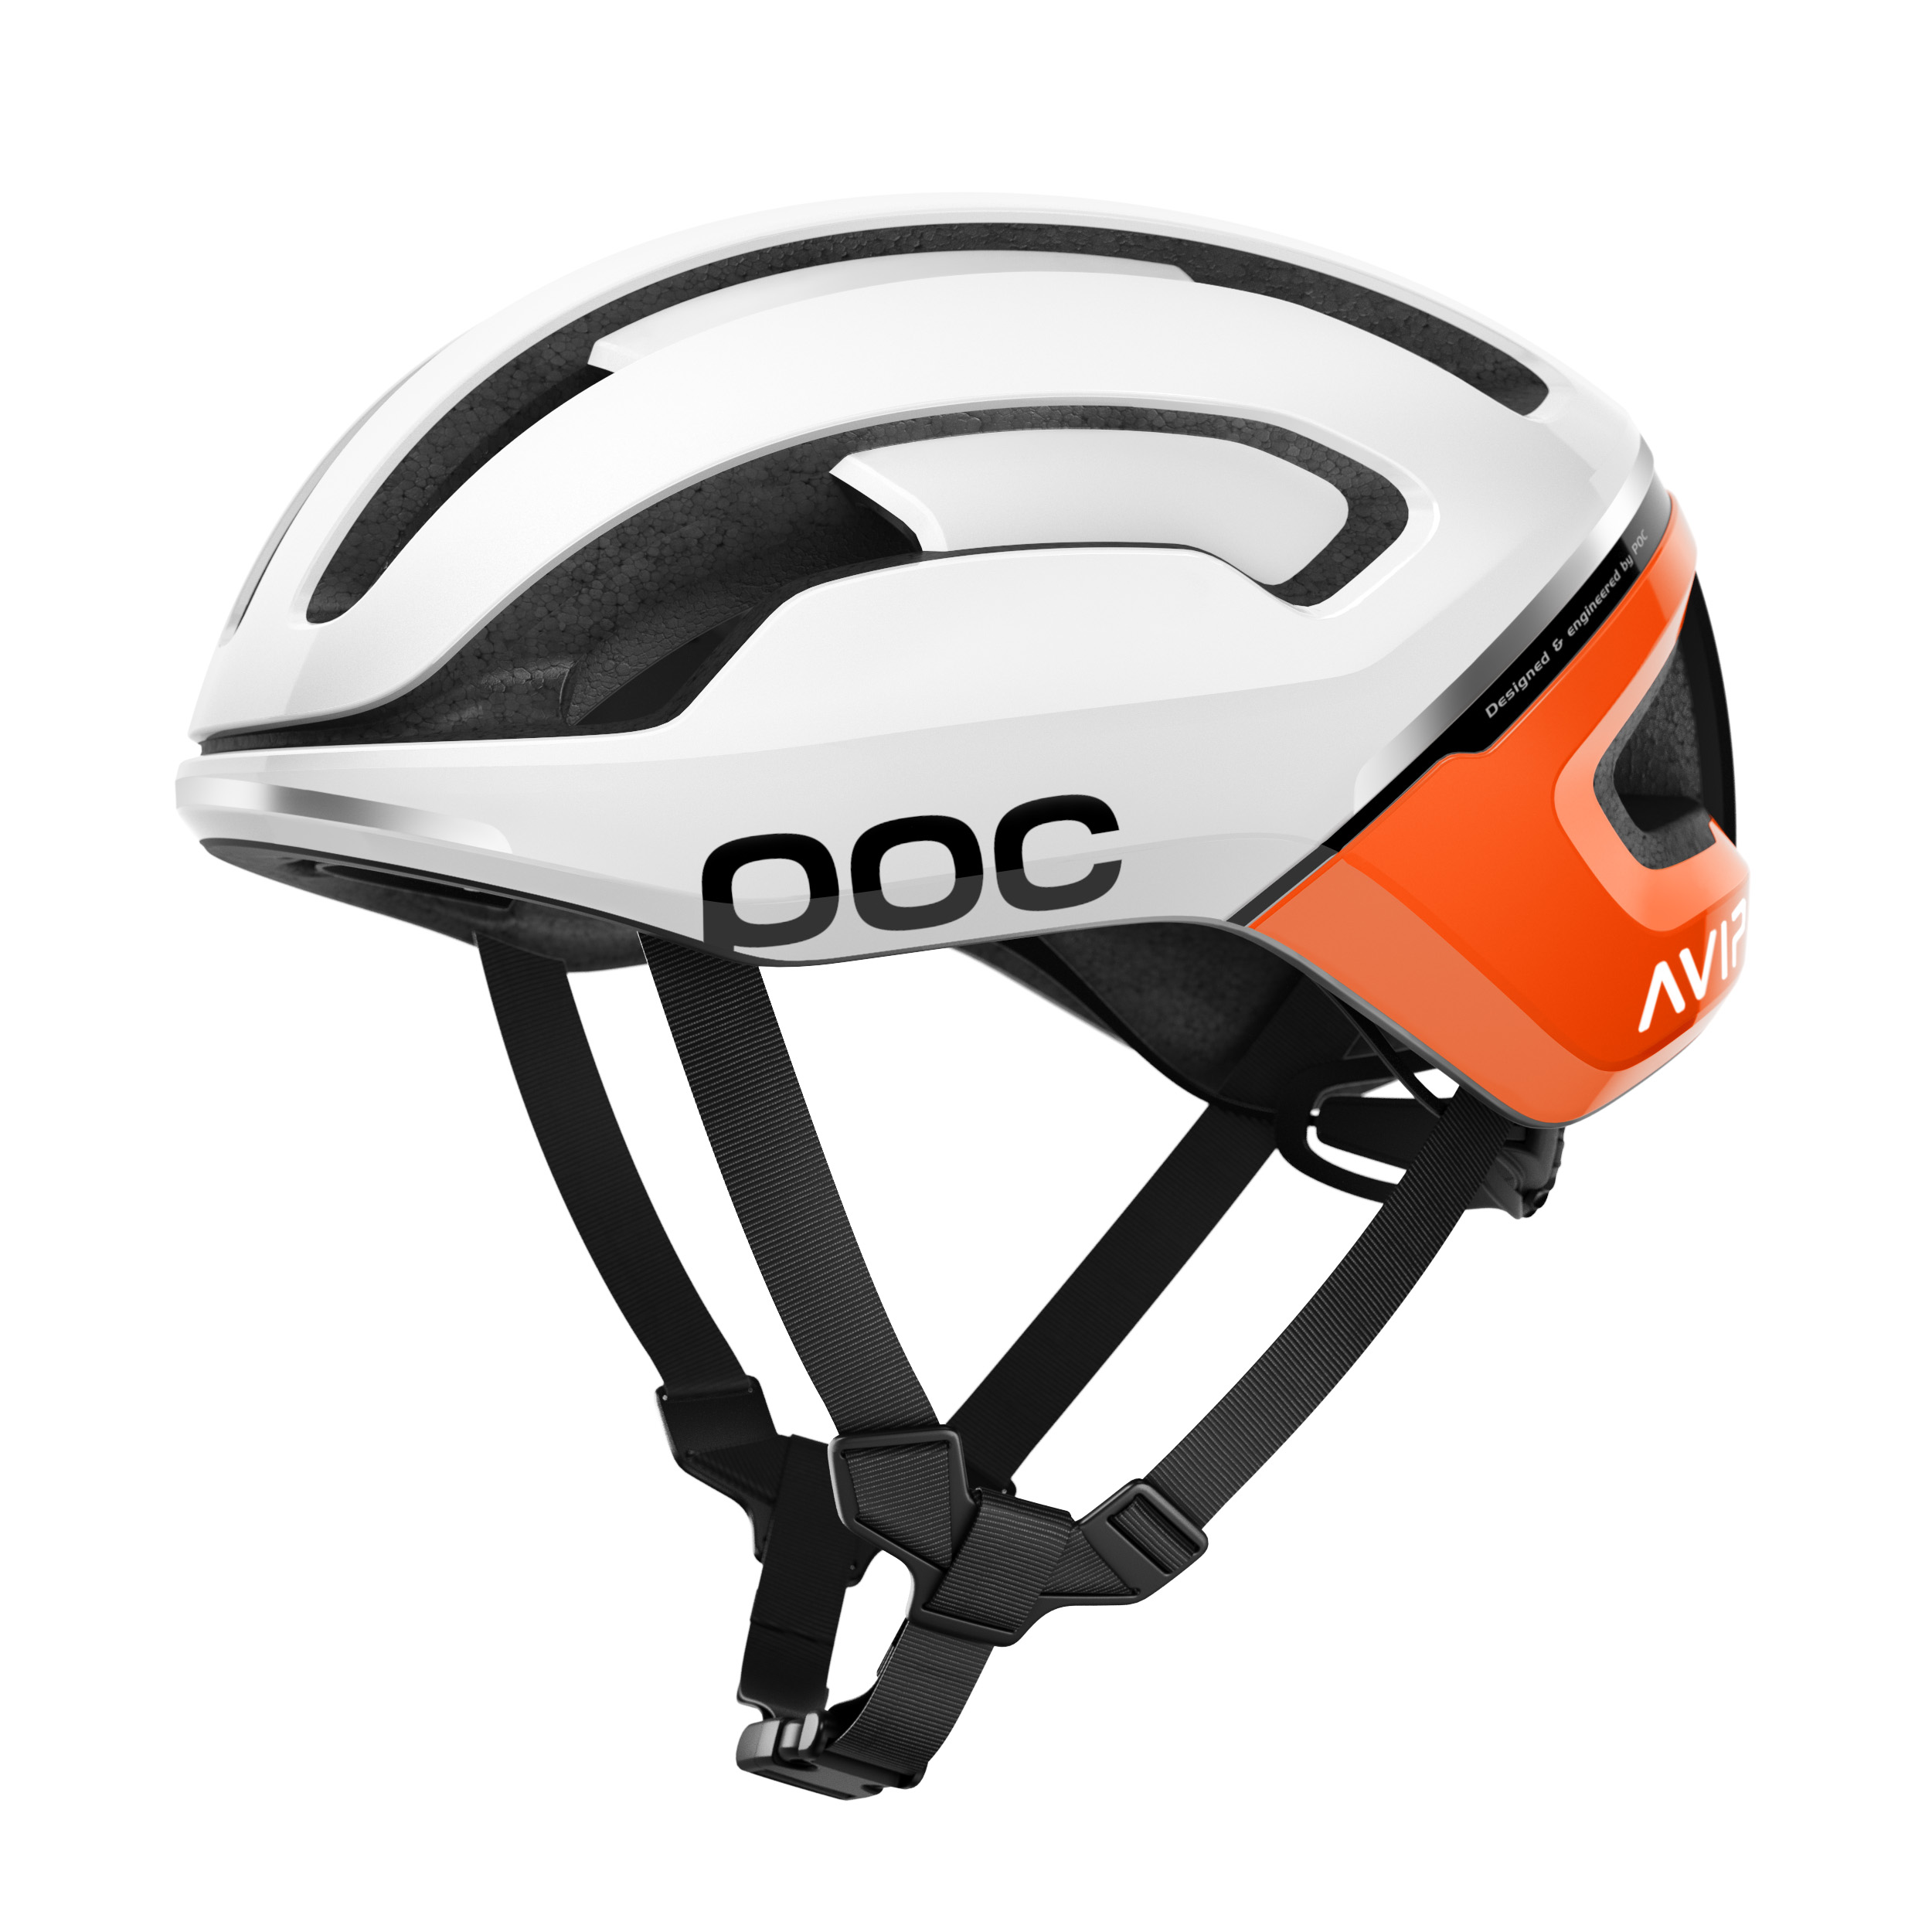 POC 2019 line includes Omne Air urban helmet | Bicycle Retailer